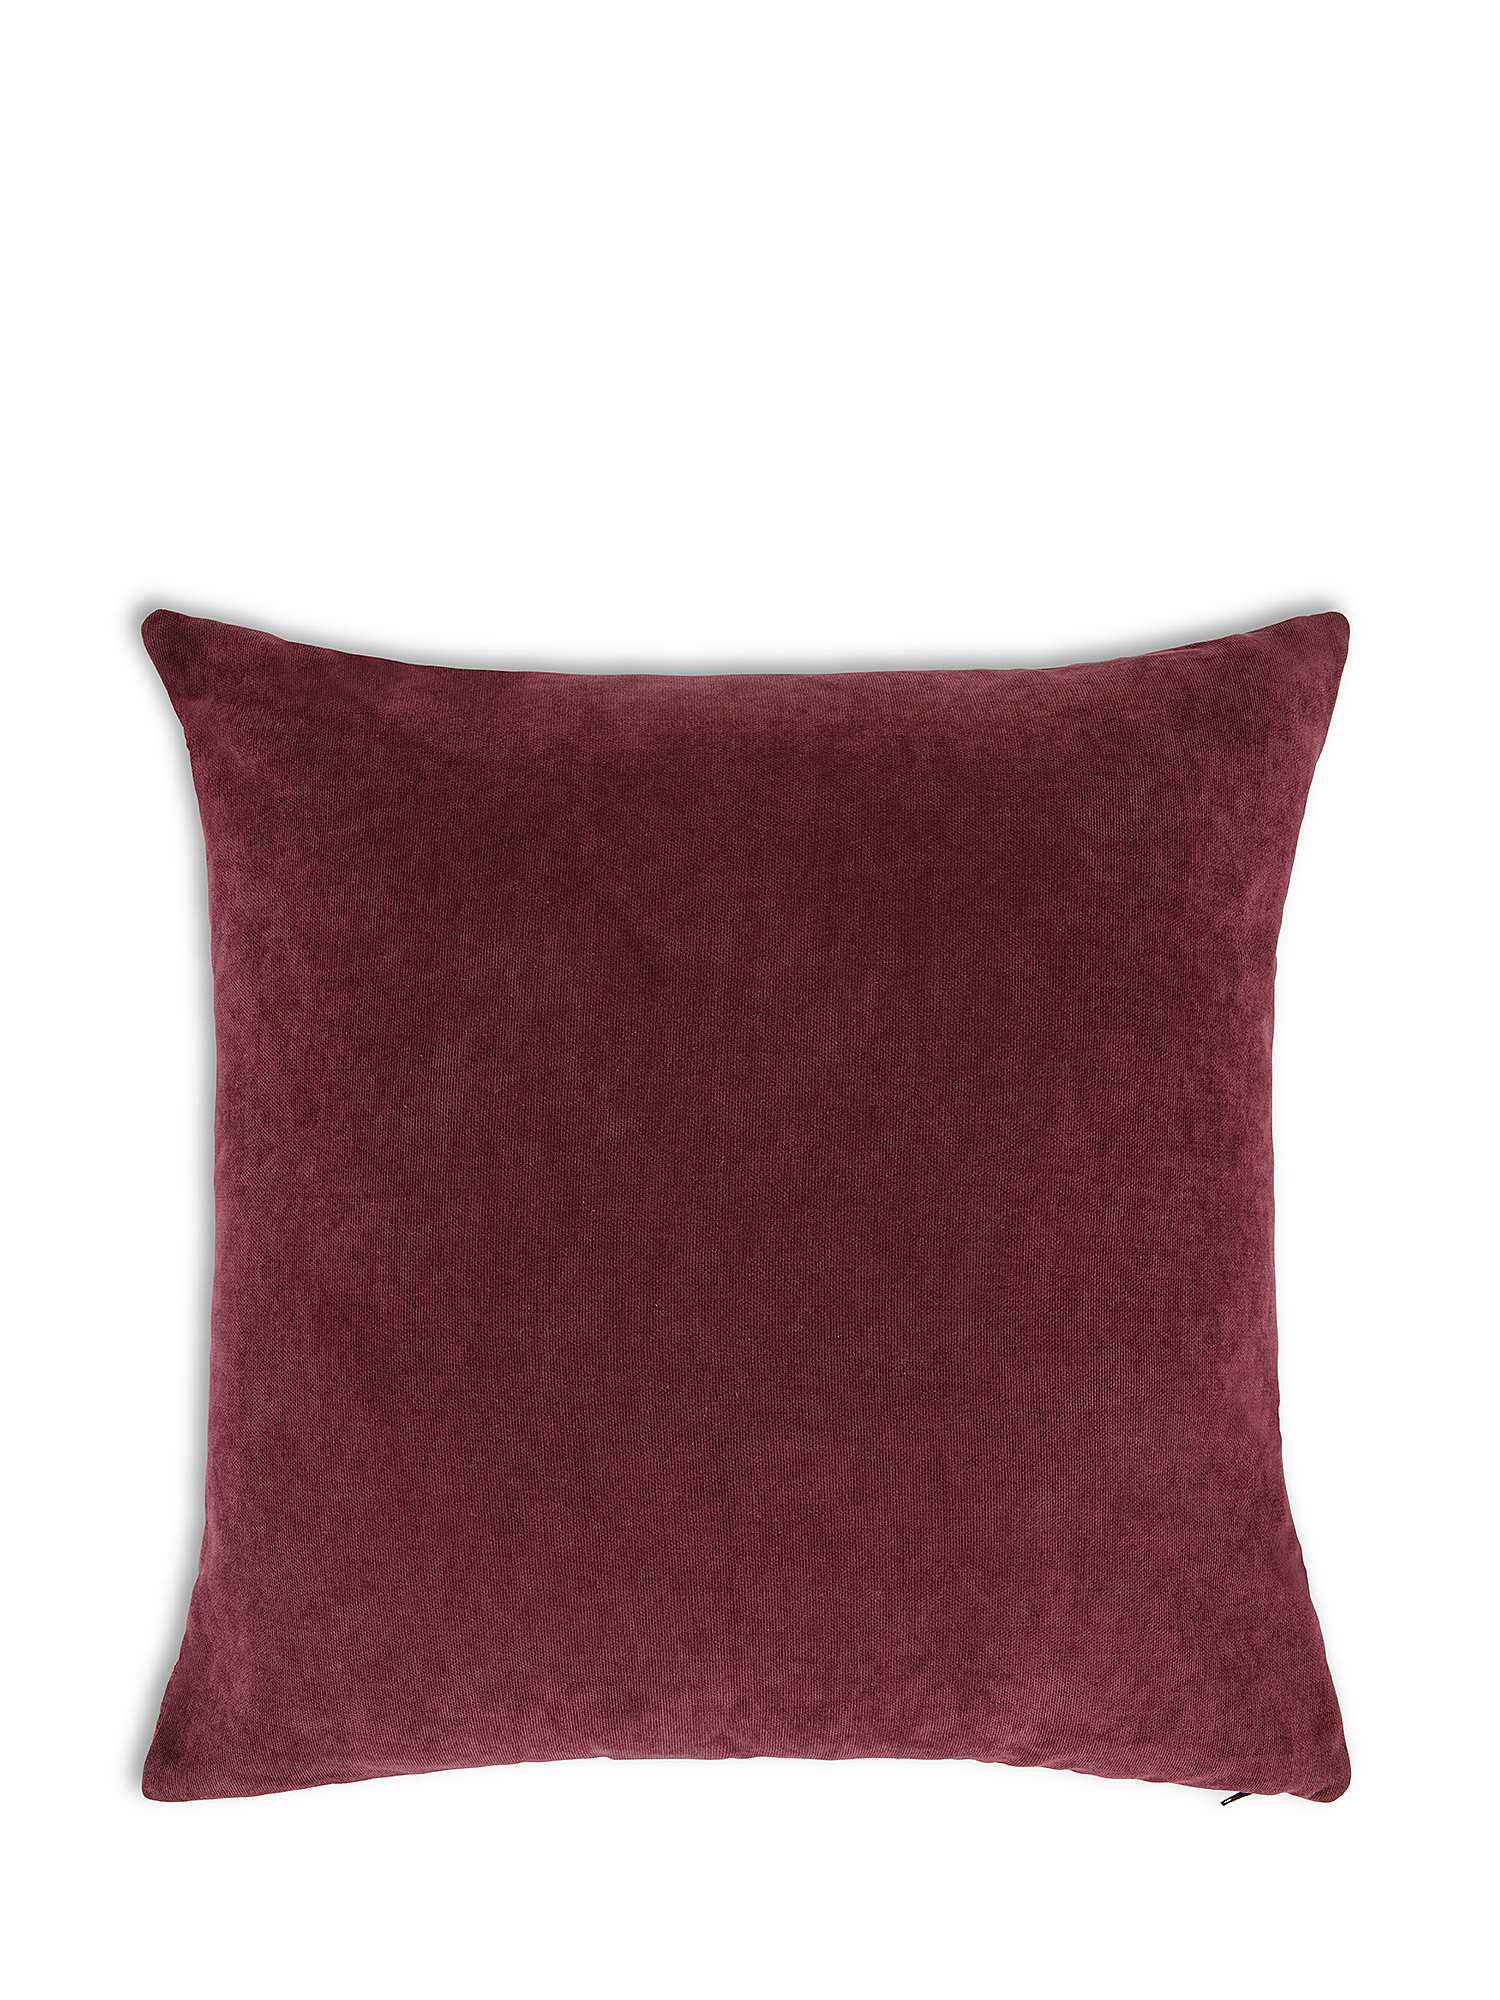 Embossed jacquard velvet cushion 45x45cm, Brown, large image number 1